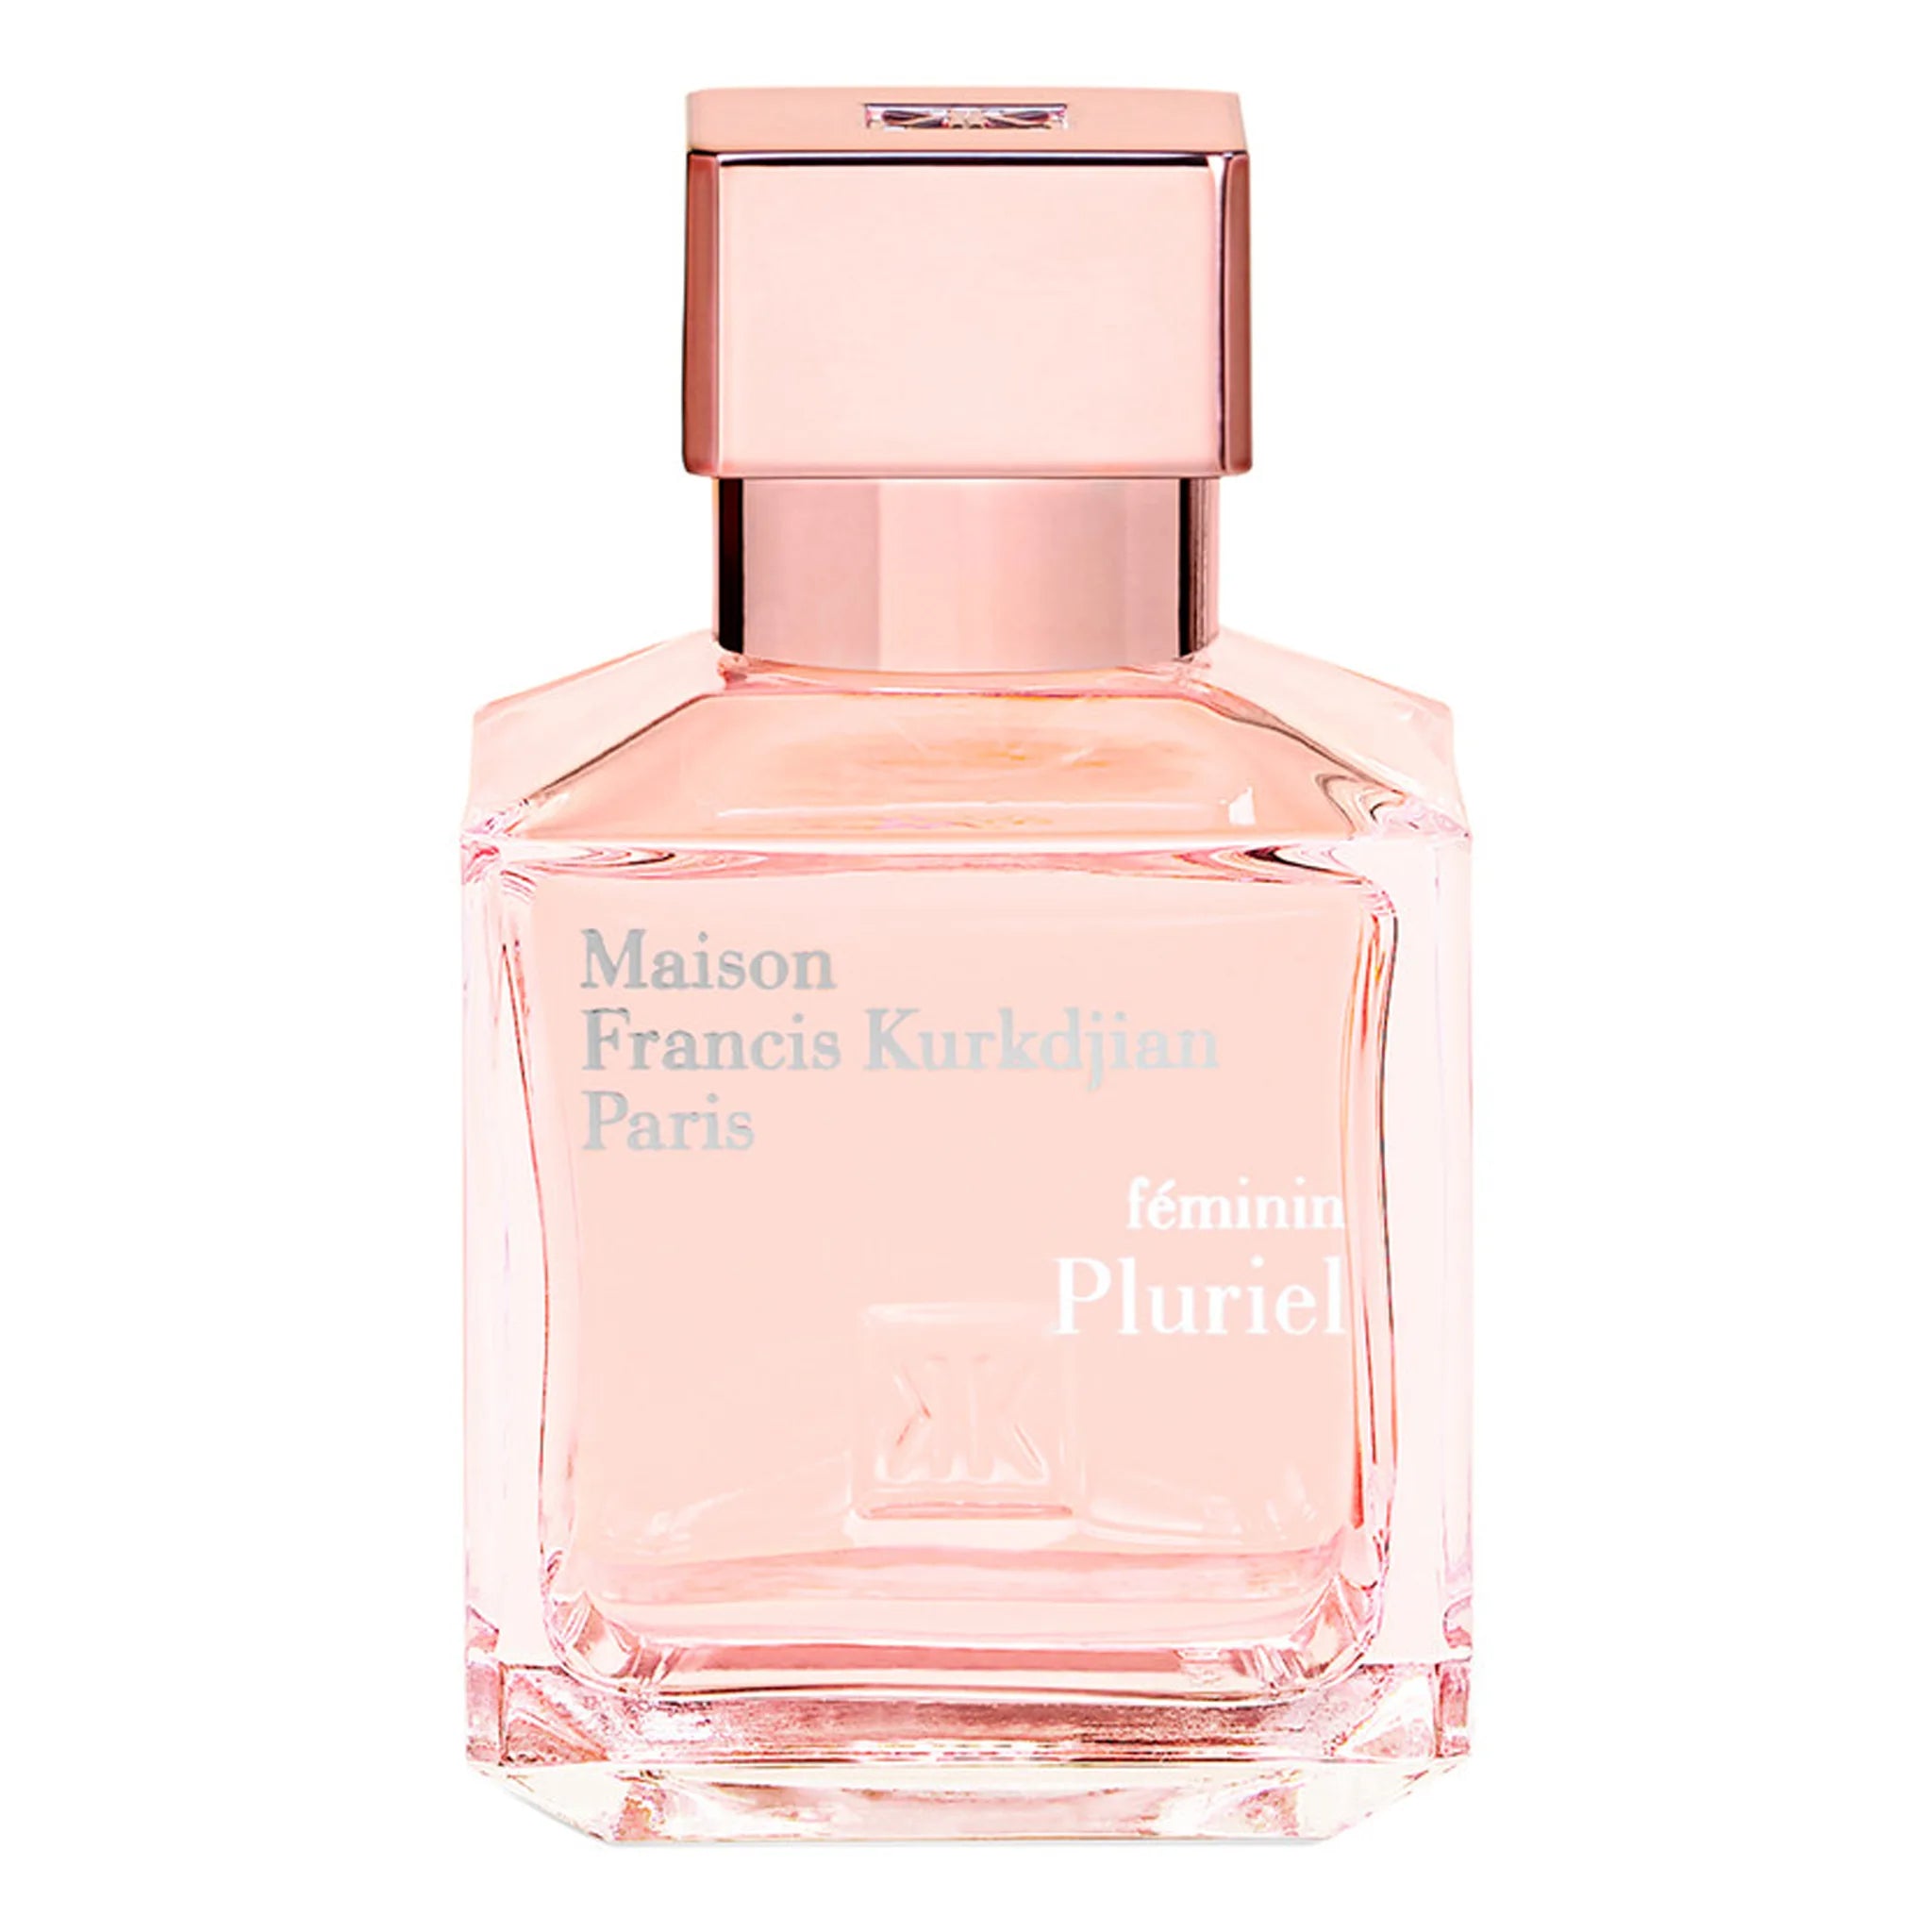 Front view of Maison Francis Kurkdjian Féminin Pluriel Eau De Parfum 70ml